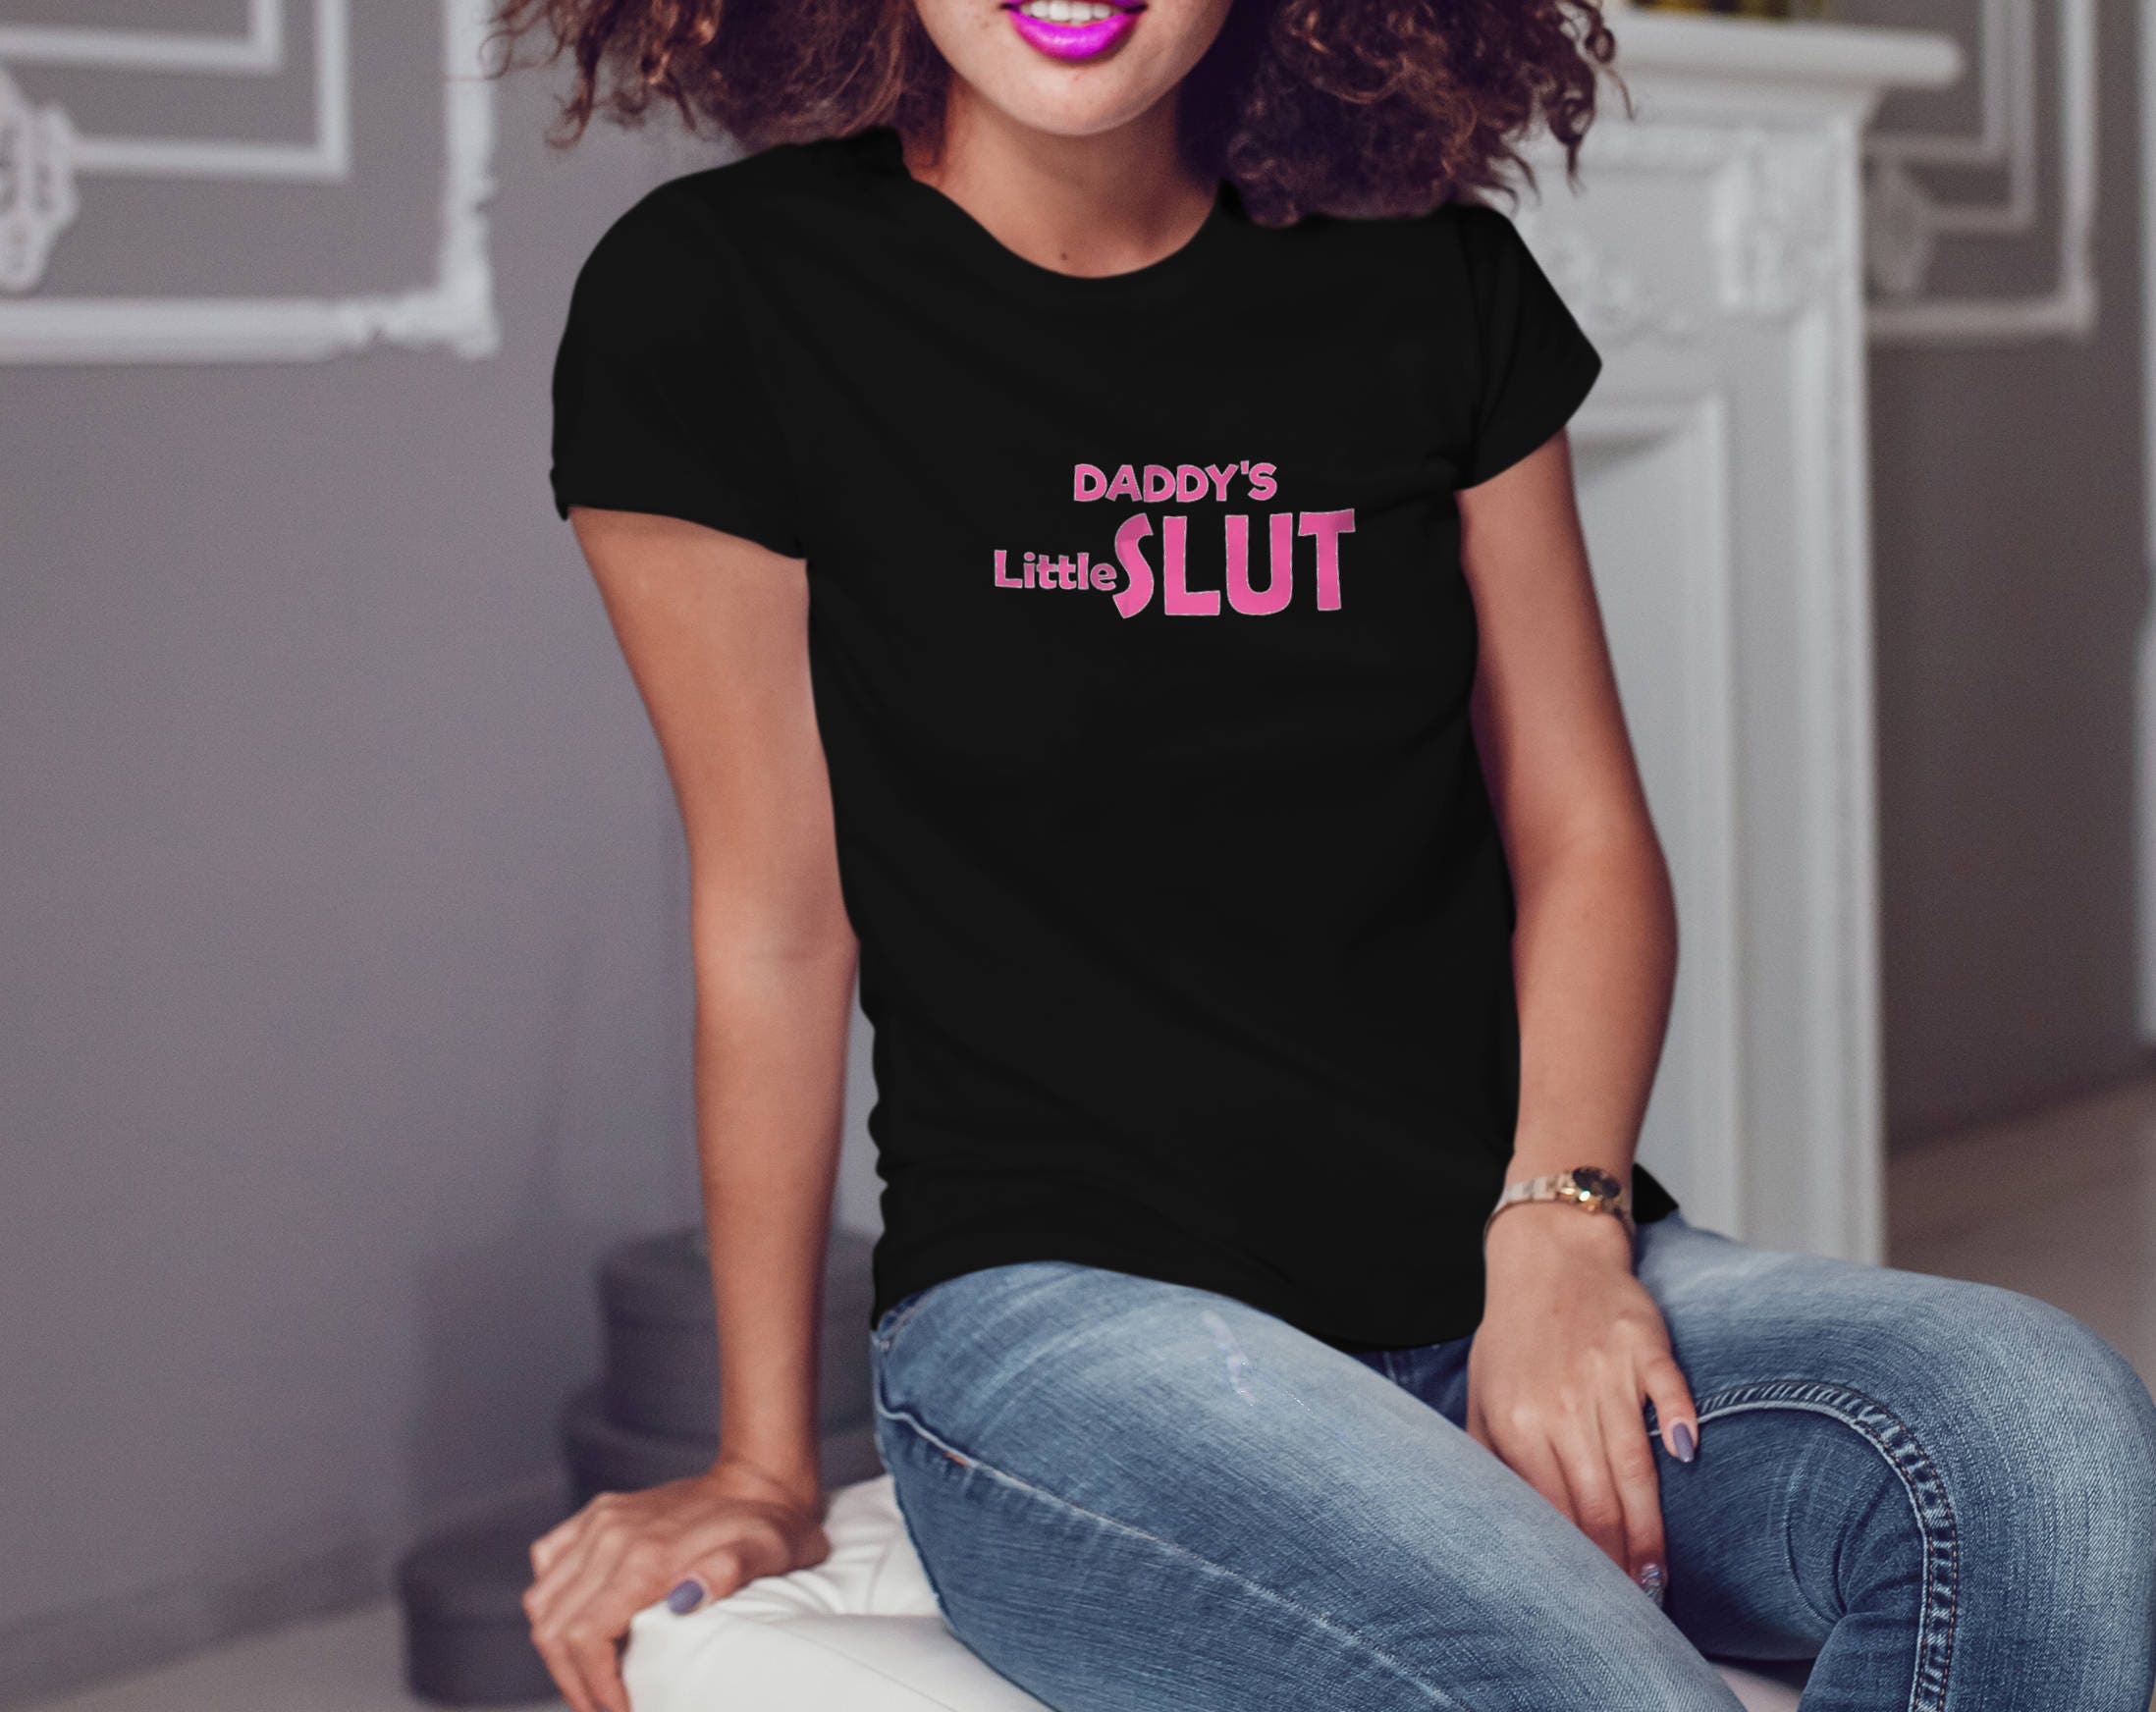 Daddys Little Slut Shirt DDLG Womens Tee Shirt